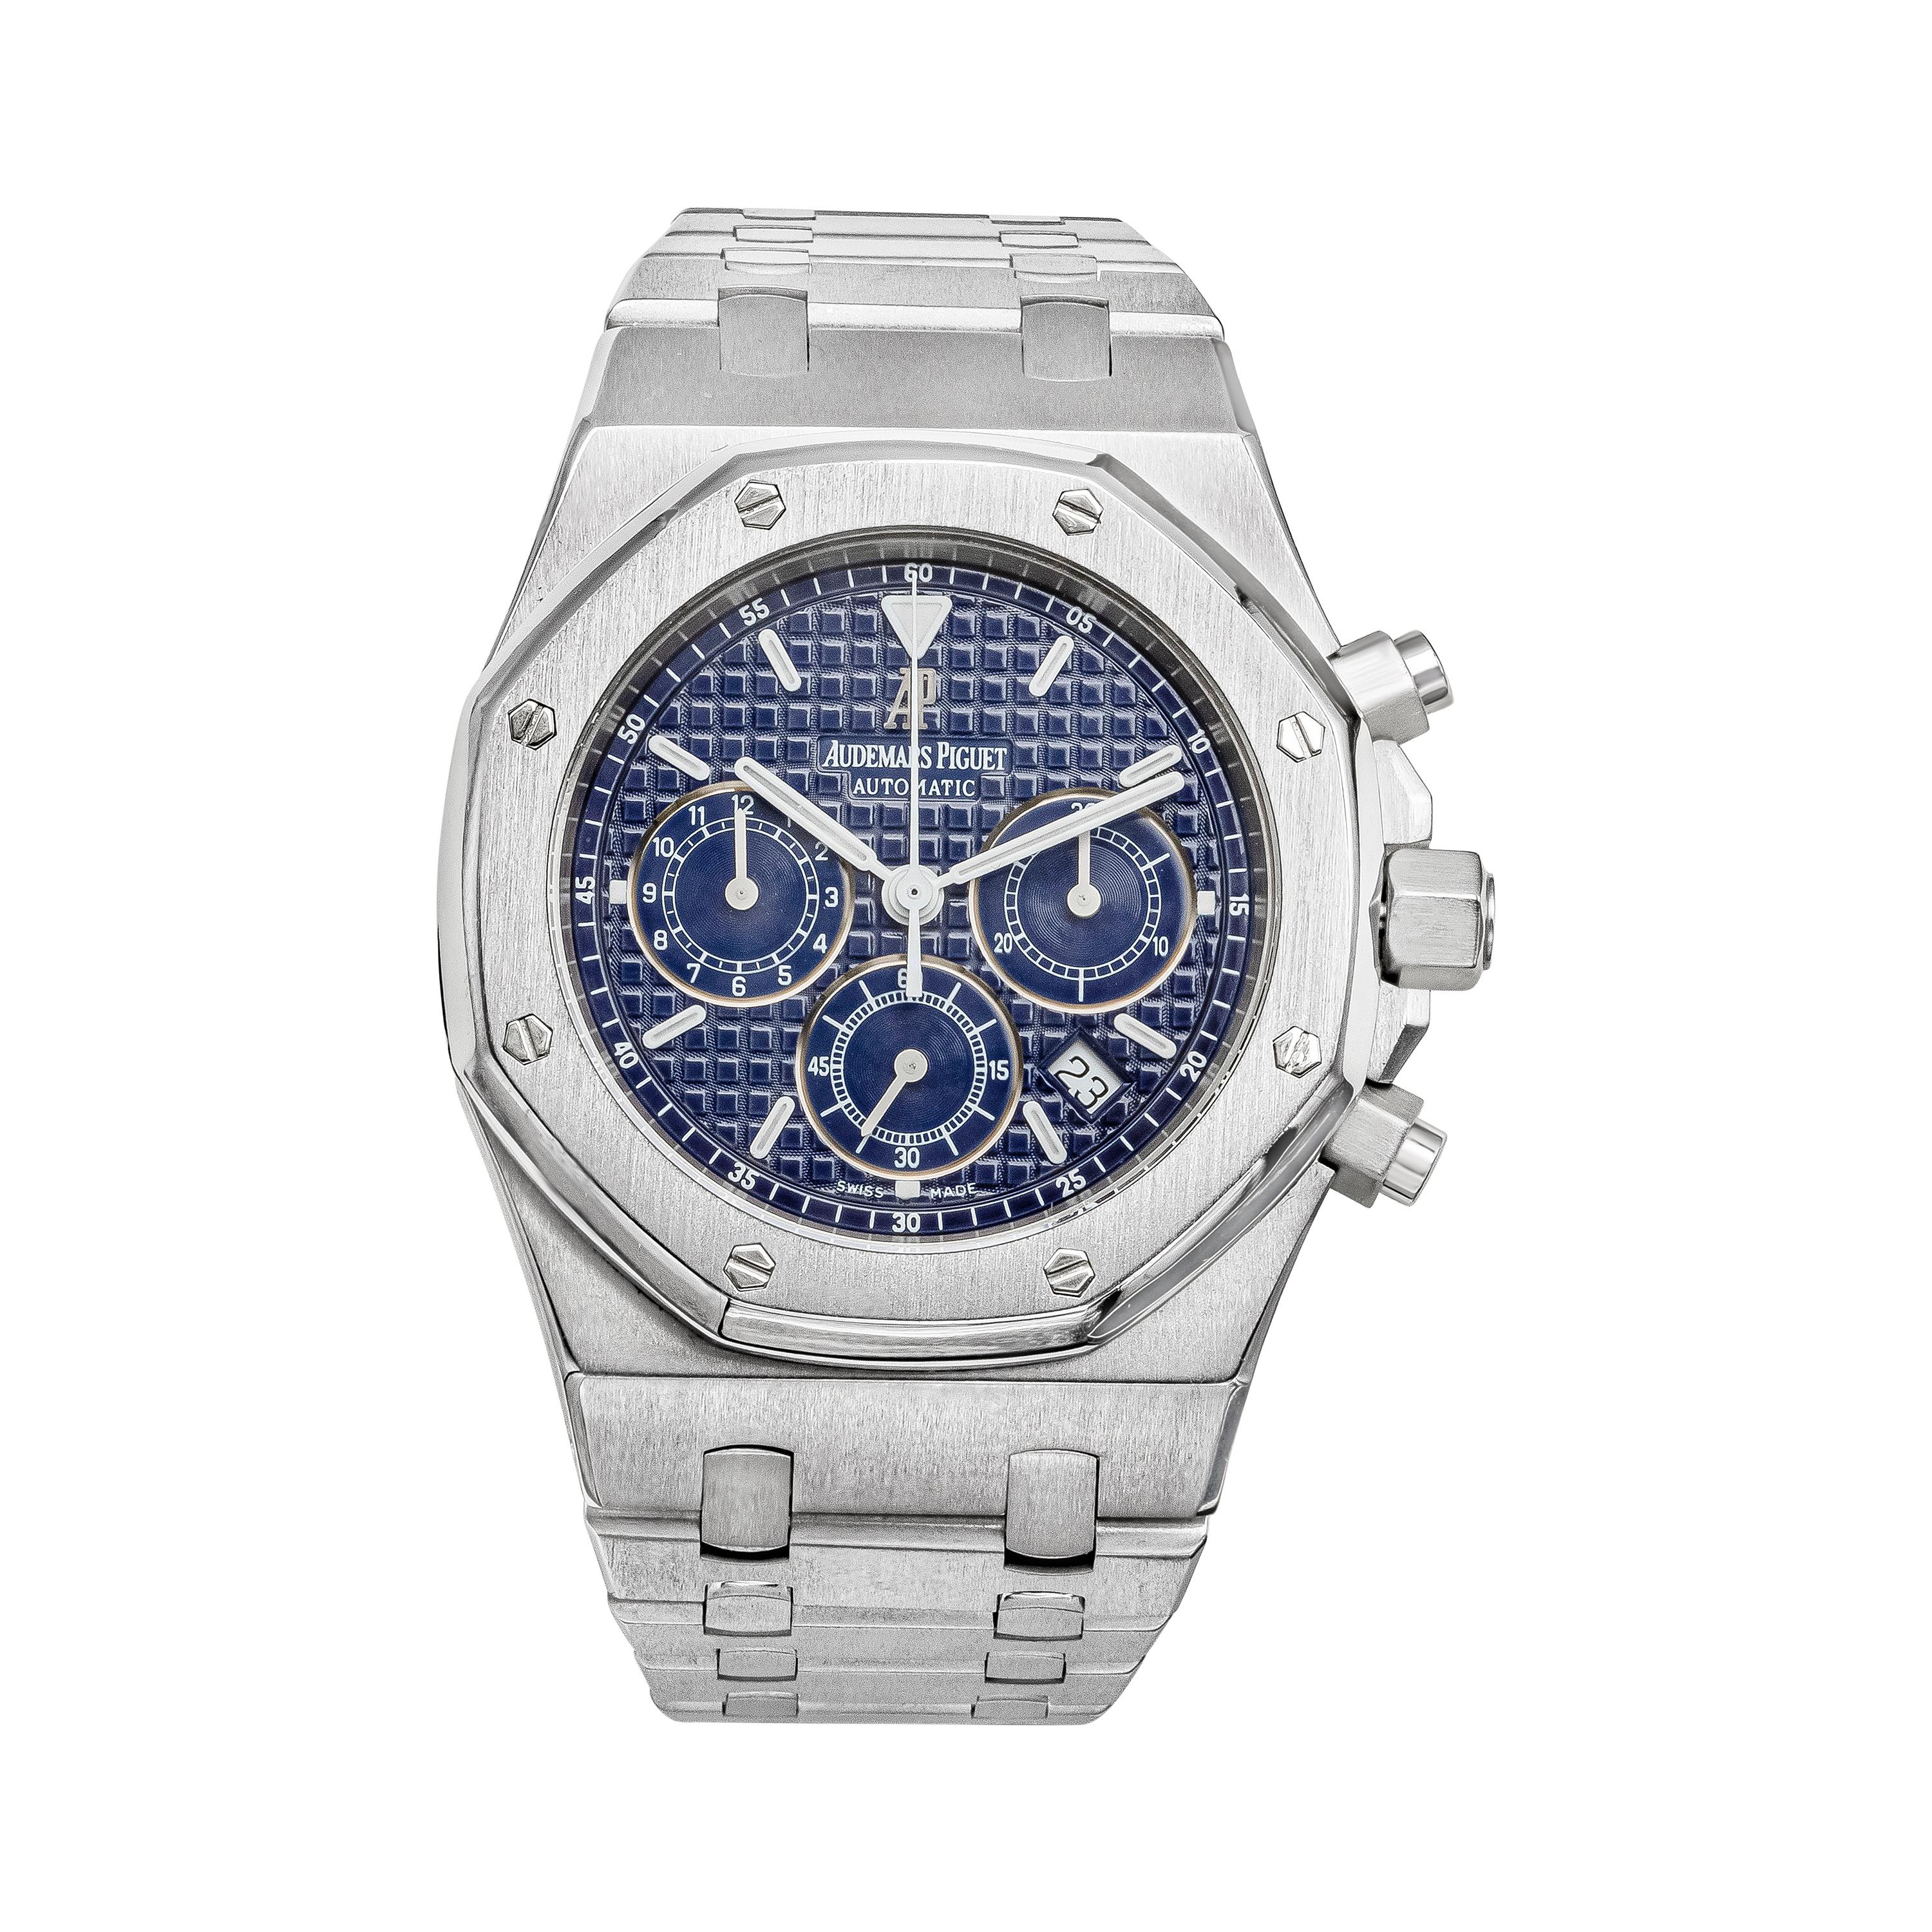 Audemars Piguet Royal Oak Chronograph Wristwatch in Stainless Steel